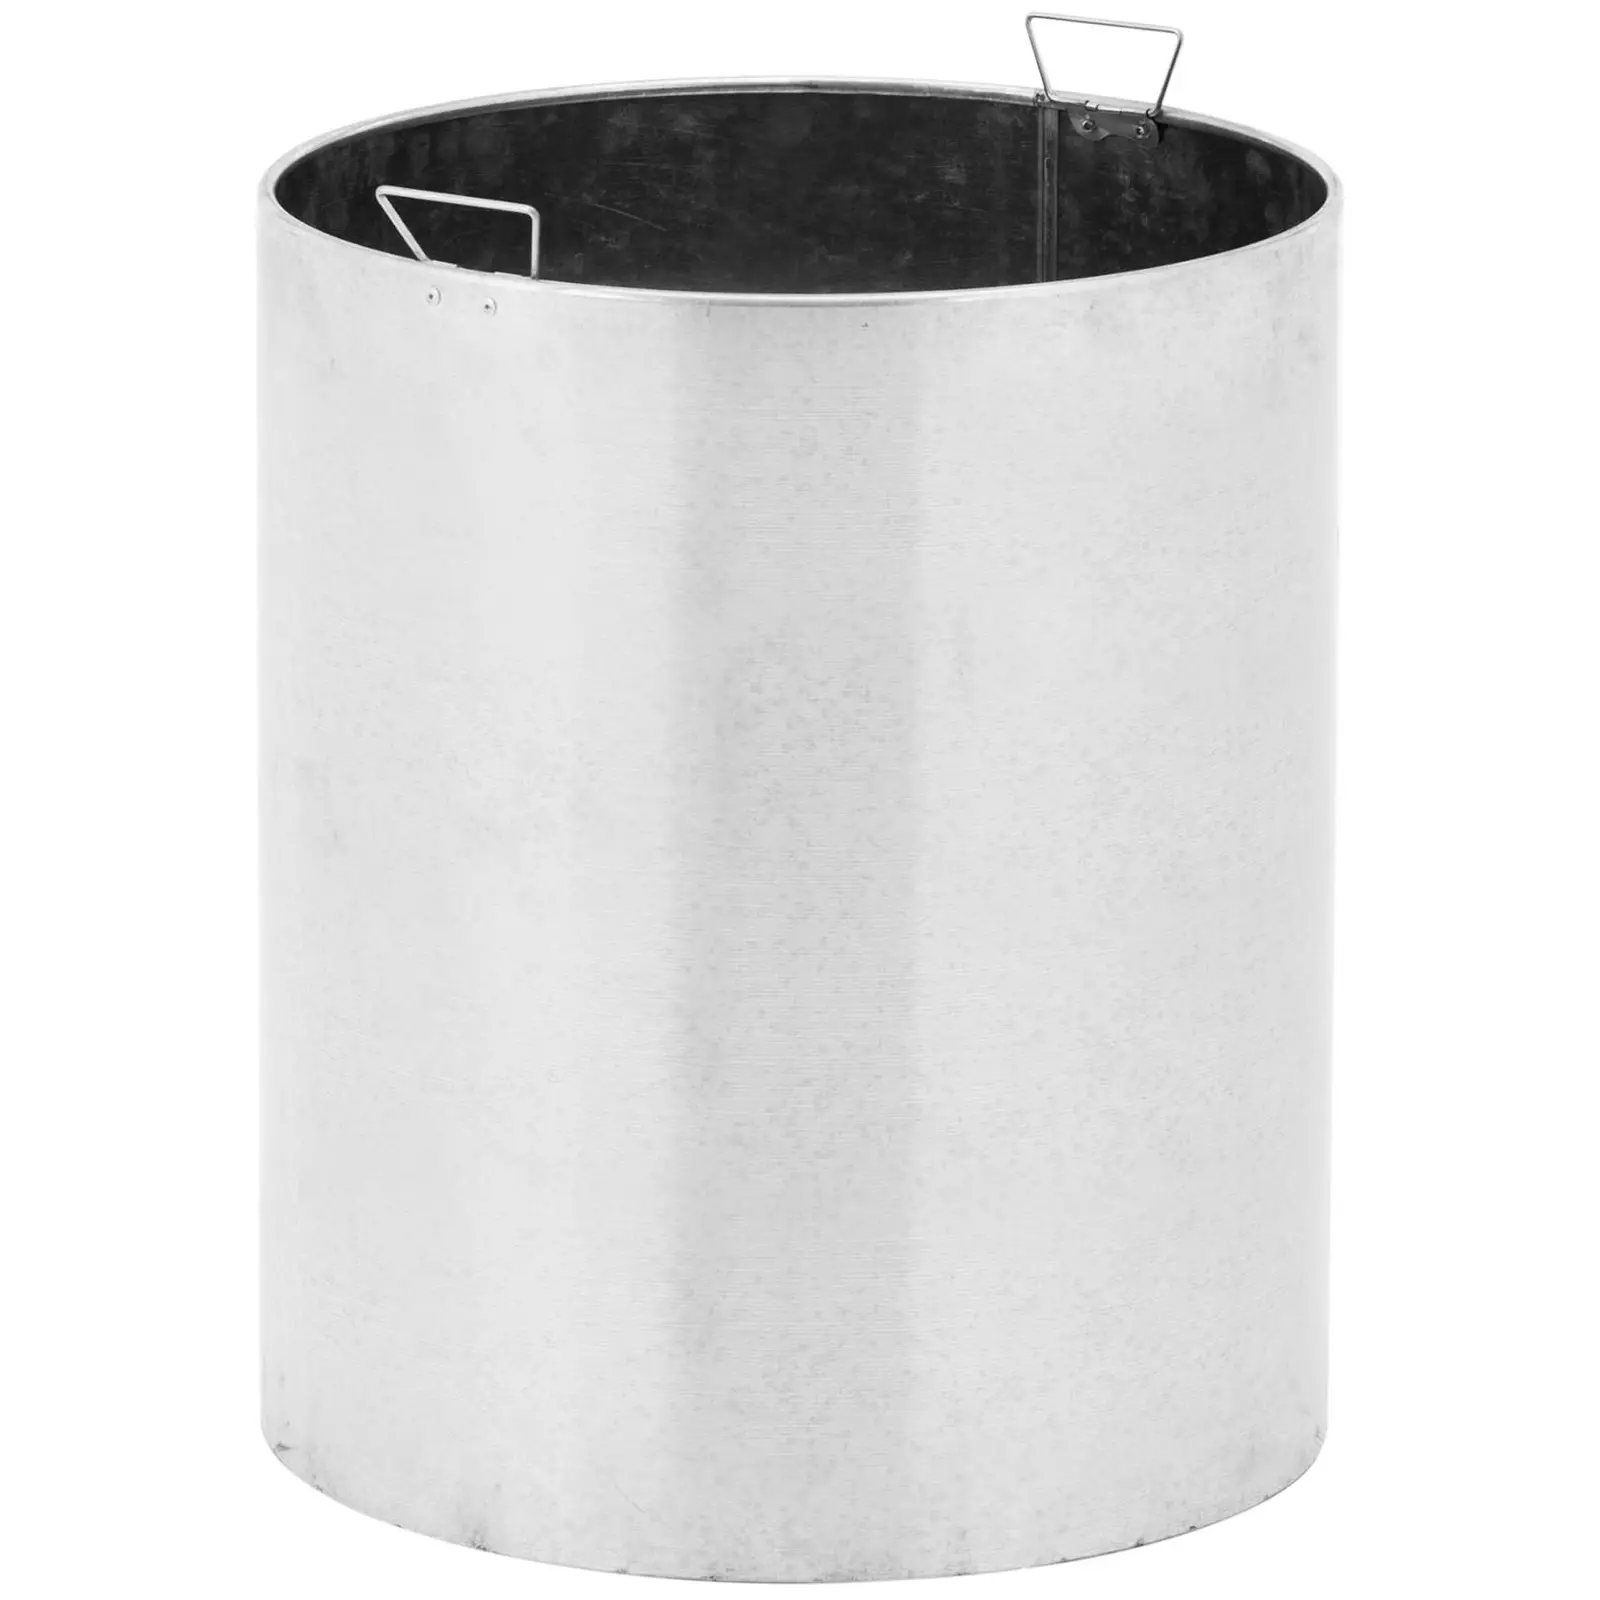 Avfallsbeholder - rund - med tak - rustfritt stål / galvanisert stål - sølv